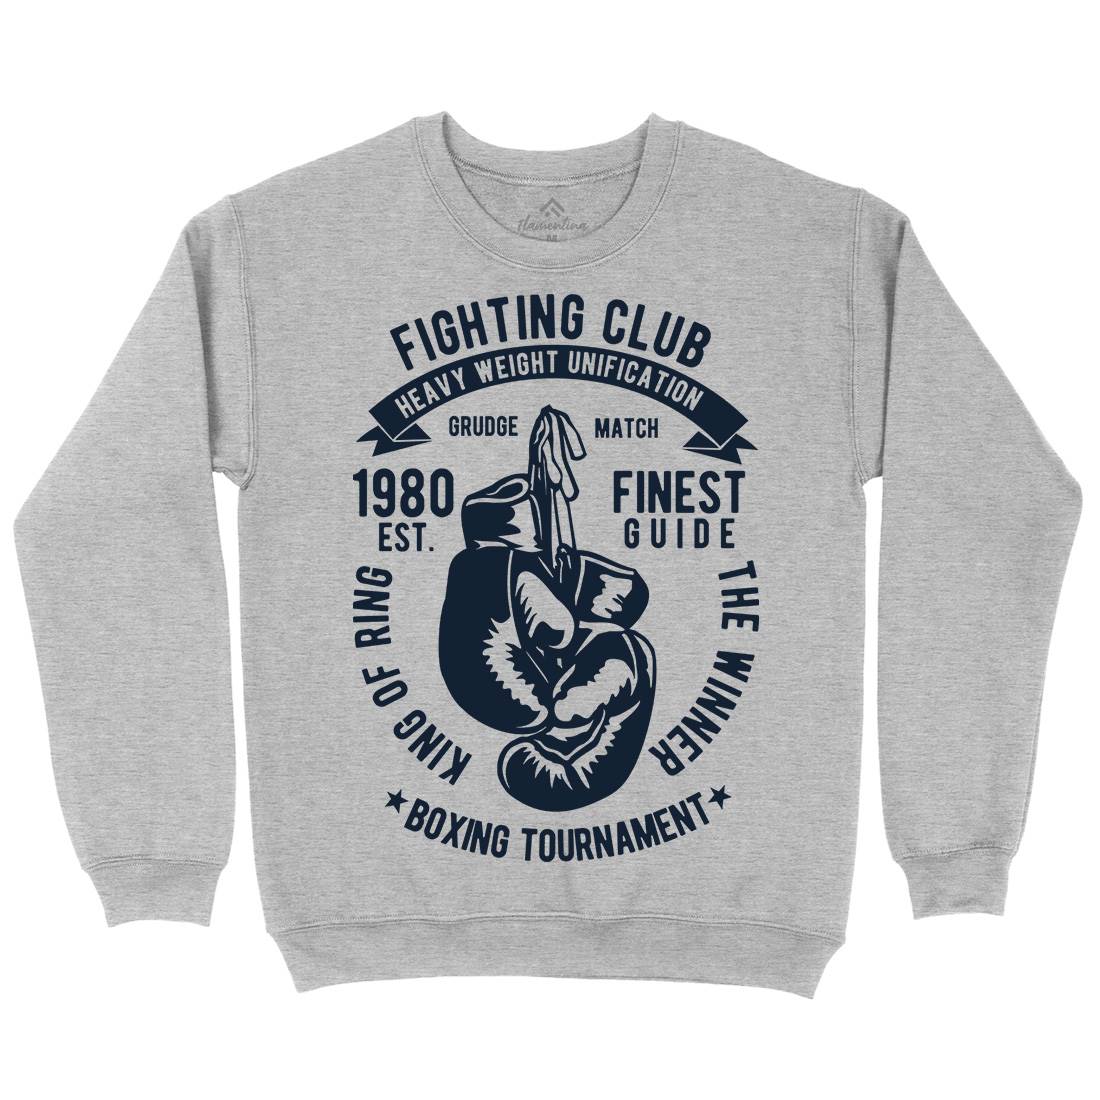 Fighting Club Kids Crew Neck Sweatshirt Sport B402